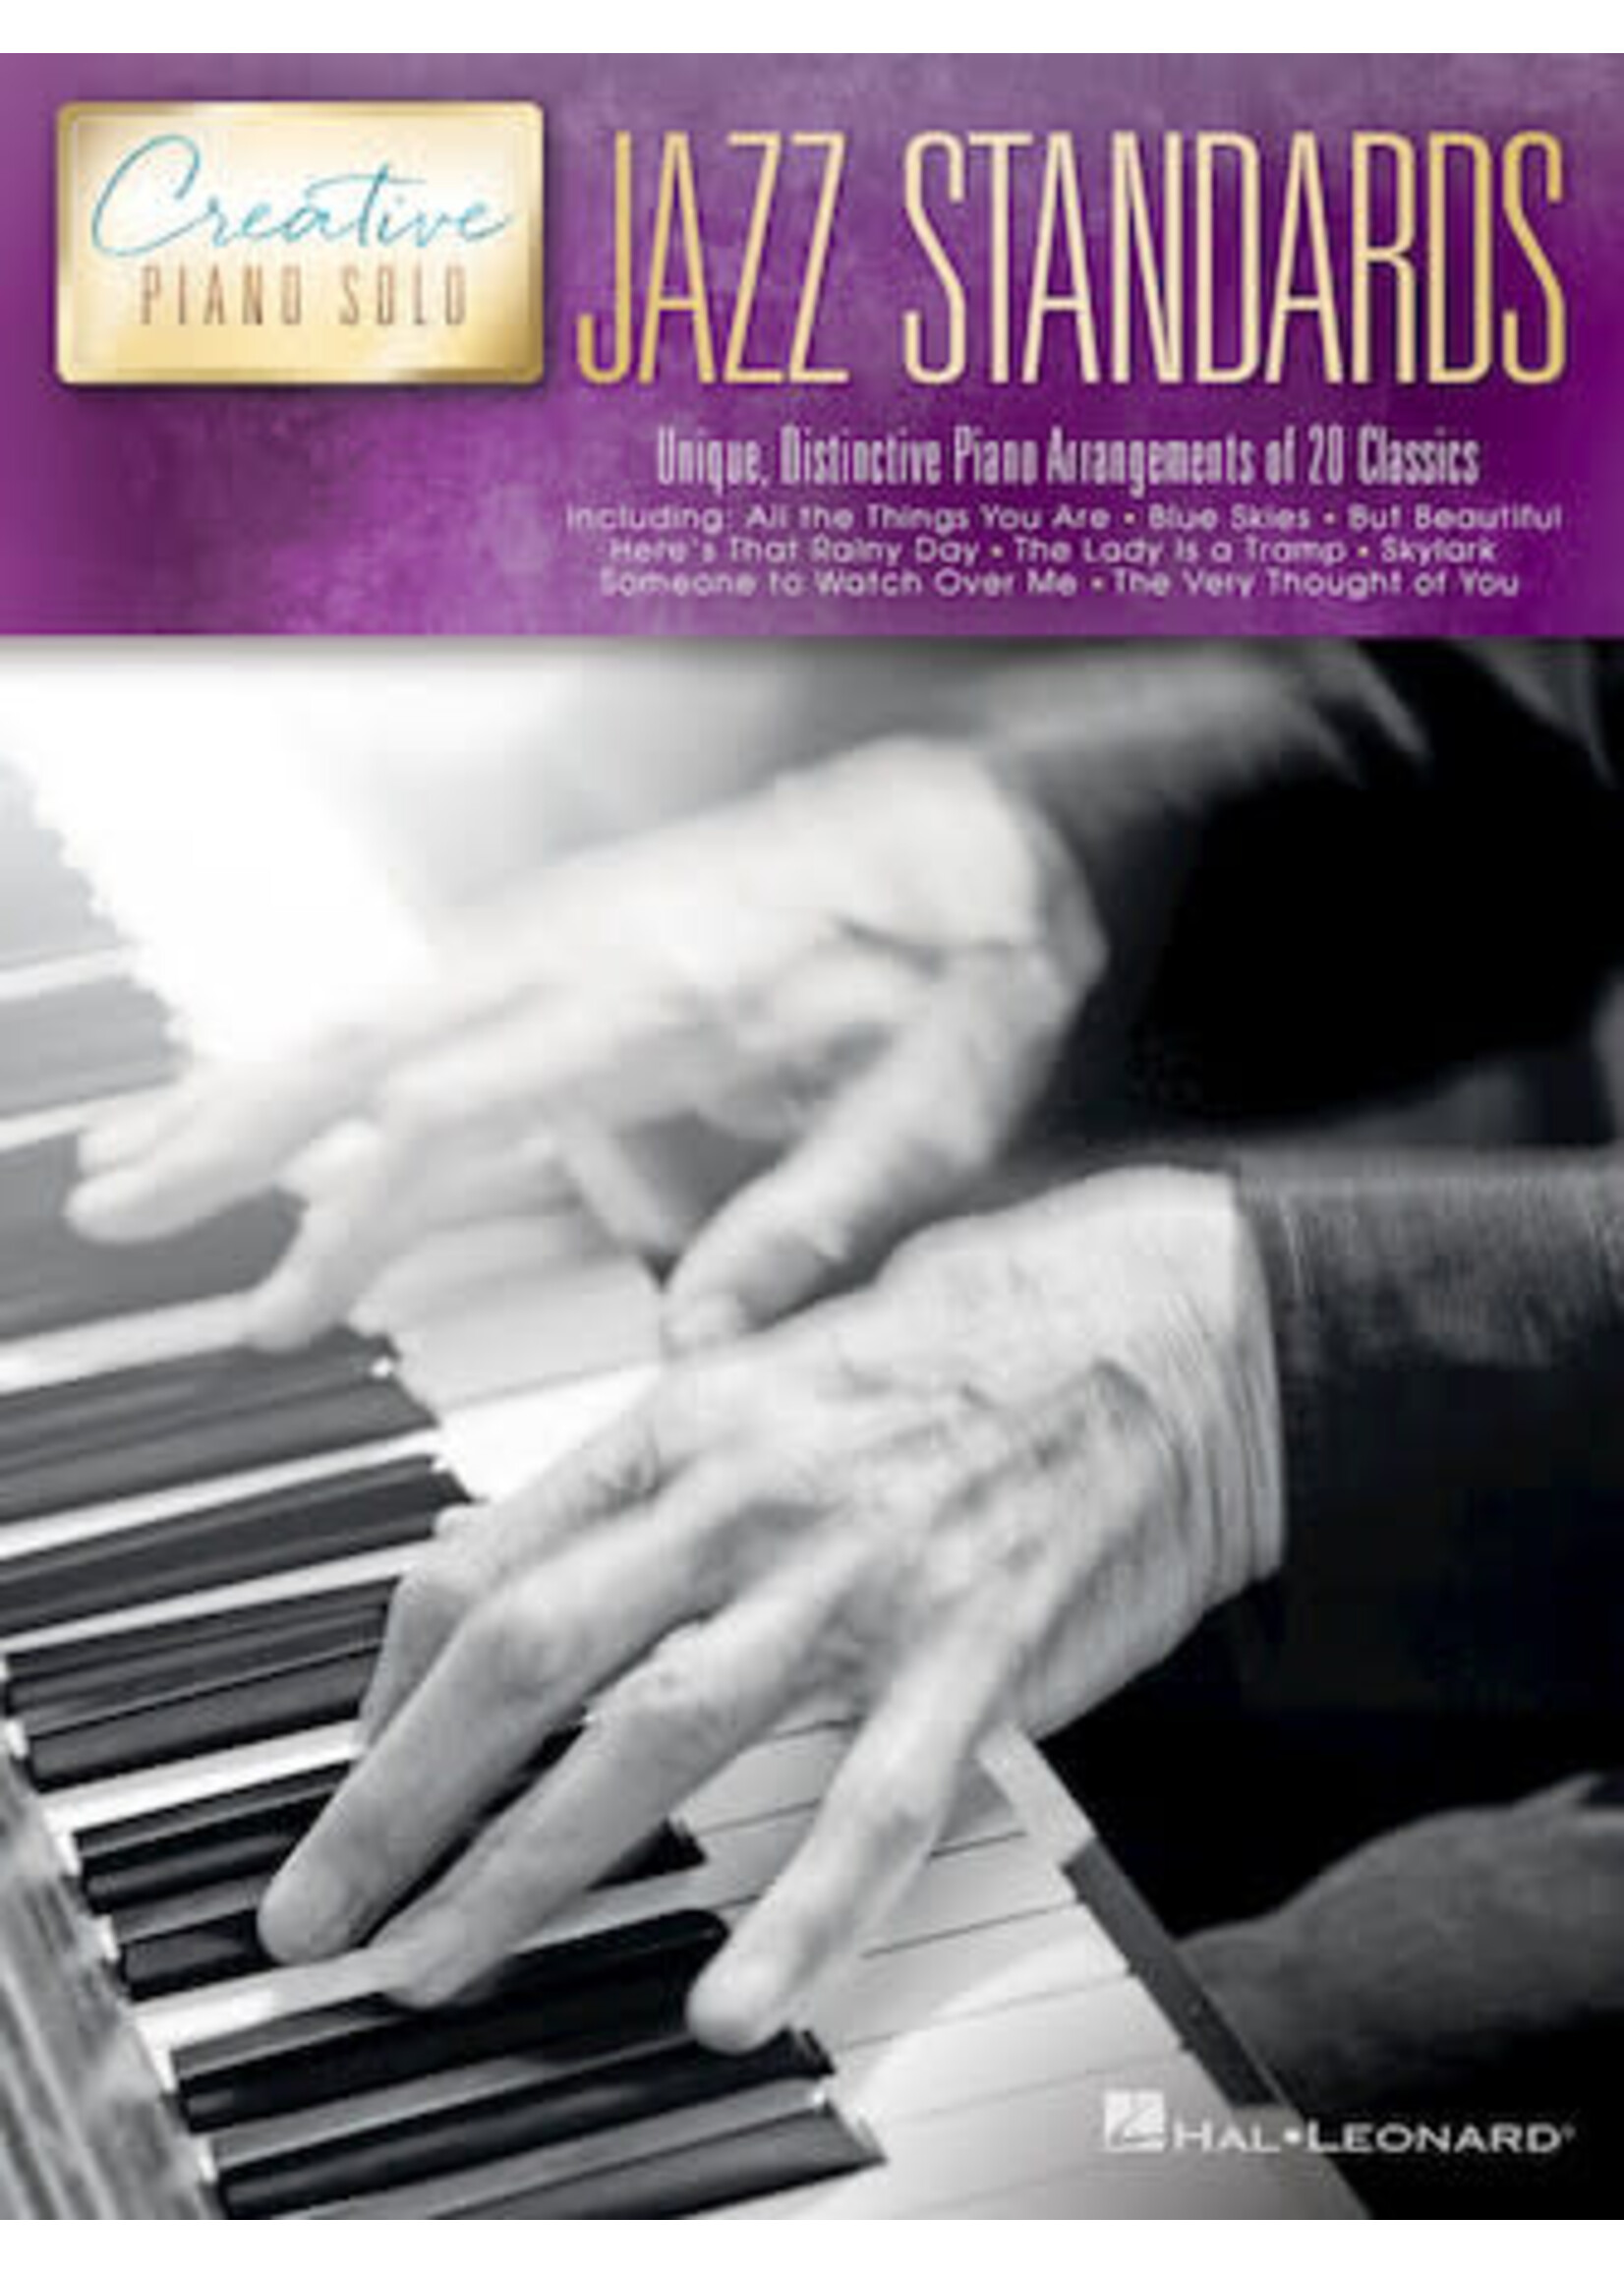 Hal Leonard Jazz Standards - Creative Piano Solo